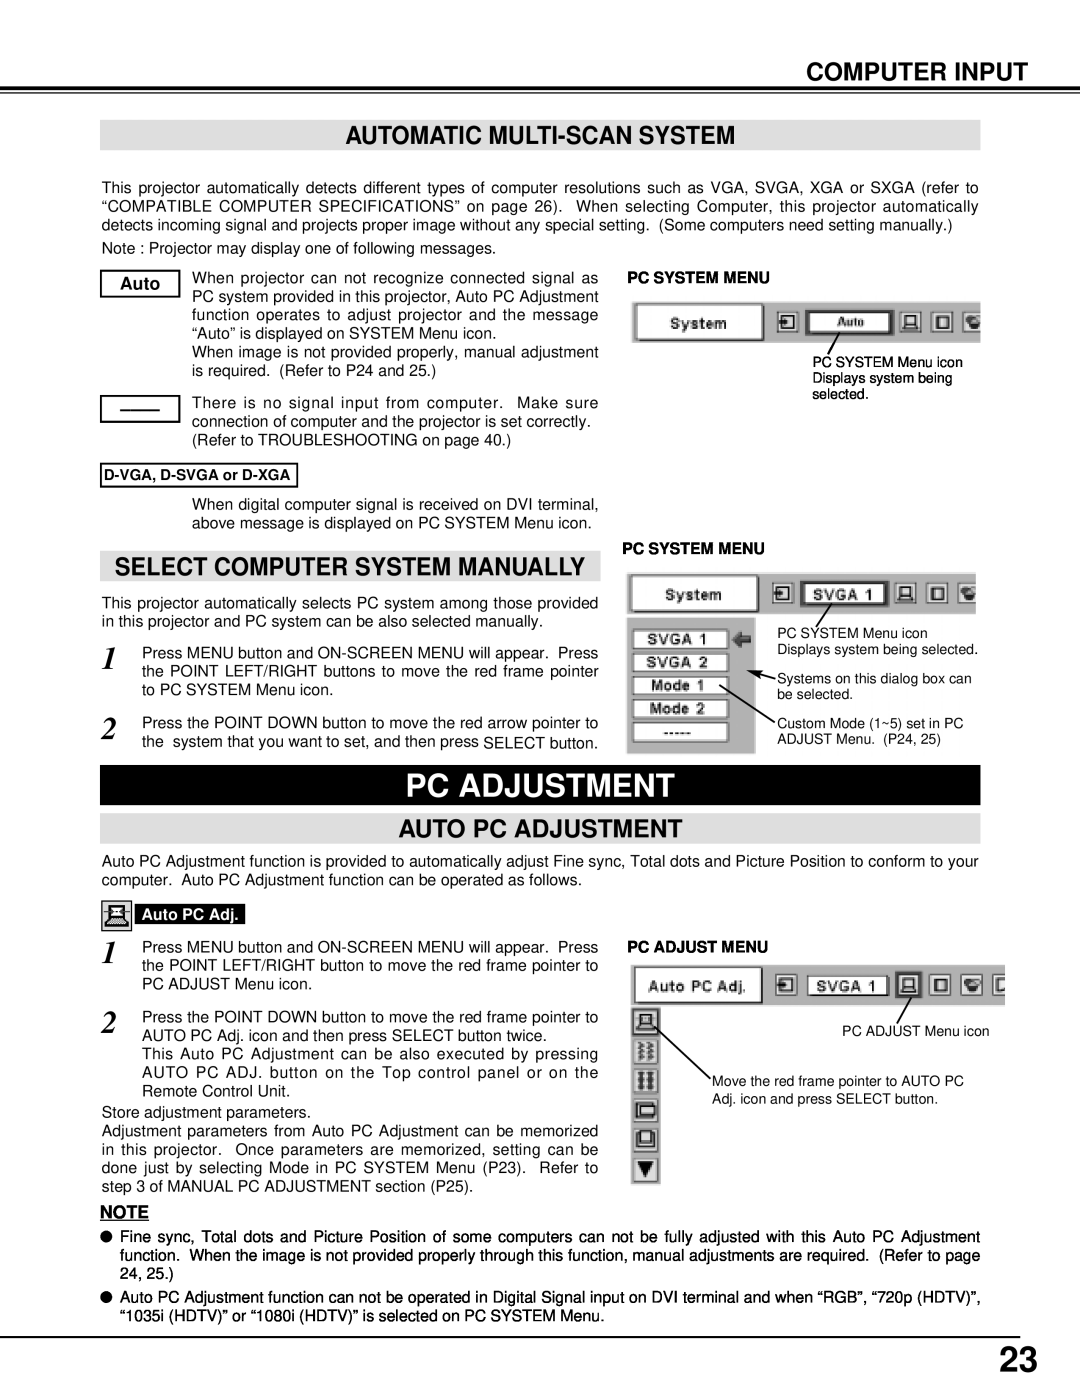 Christie Digital Systems 38-VIV205-01 Computer Input Automatic Multi-Scan System, Auto Pc Adjustment, Pc System Menu 